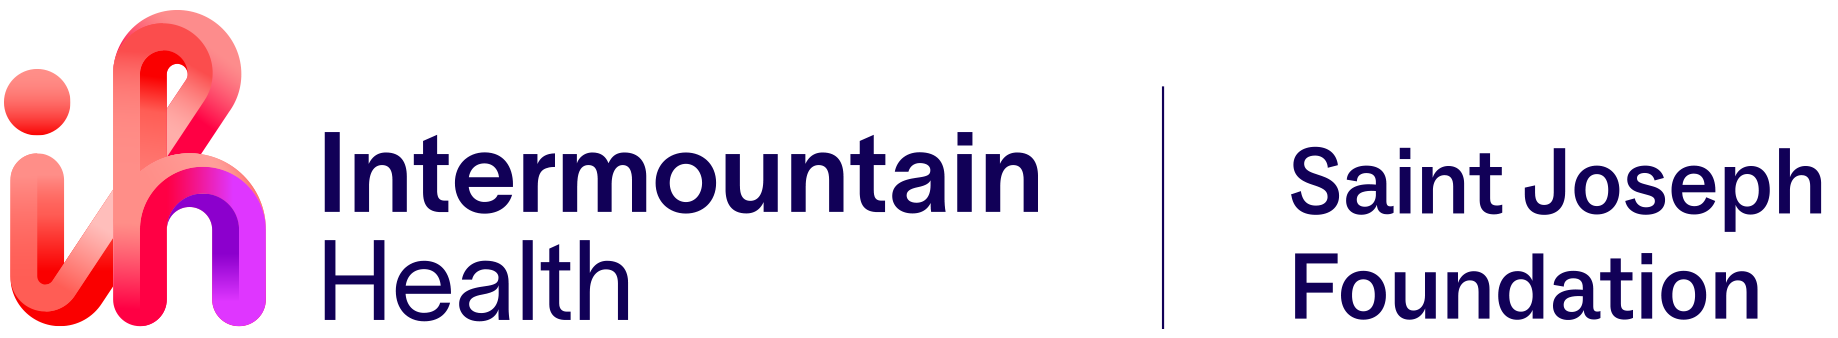 Intermountain Saint Joseph Foundation logo